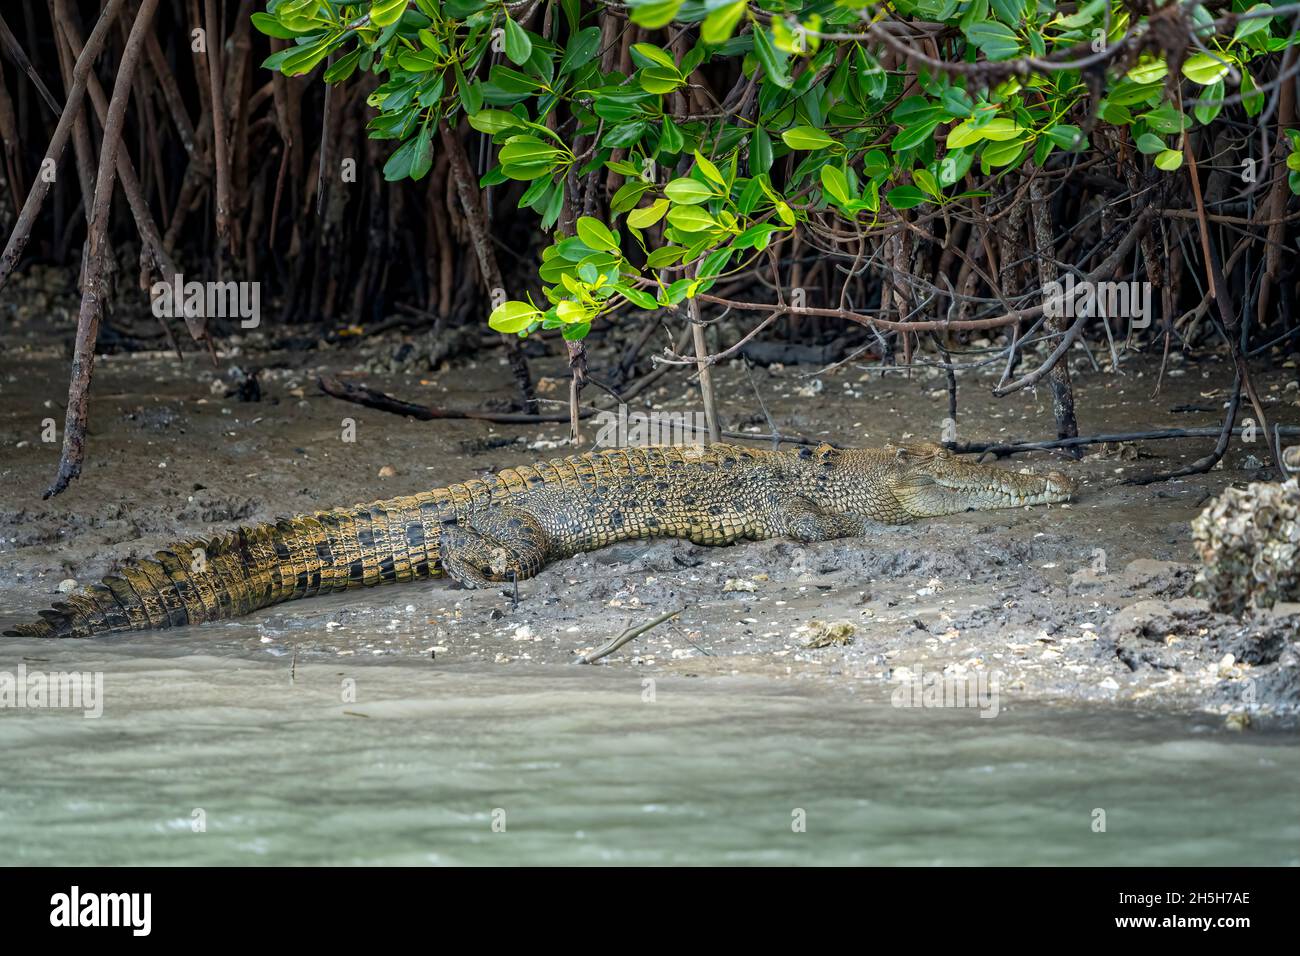 Estuarine crocodile or saltwater crocodile (Crocodylus porosus) sunning itself on muddy bank in mangroves at low tide. North Queensland, Australia Stock Photo